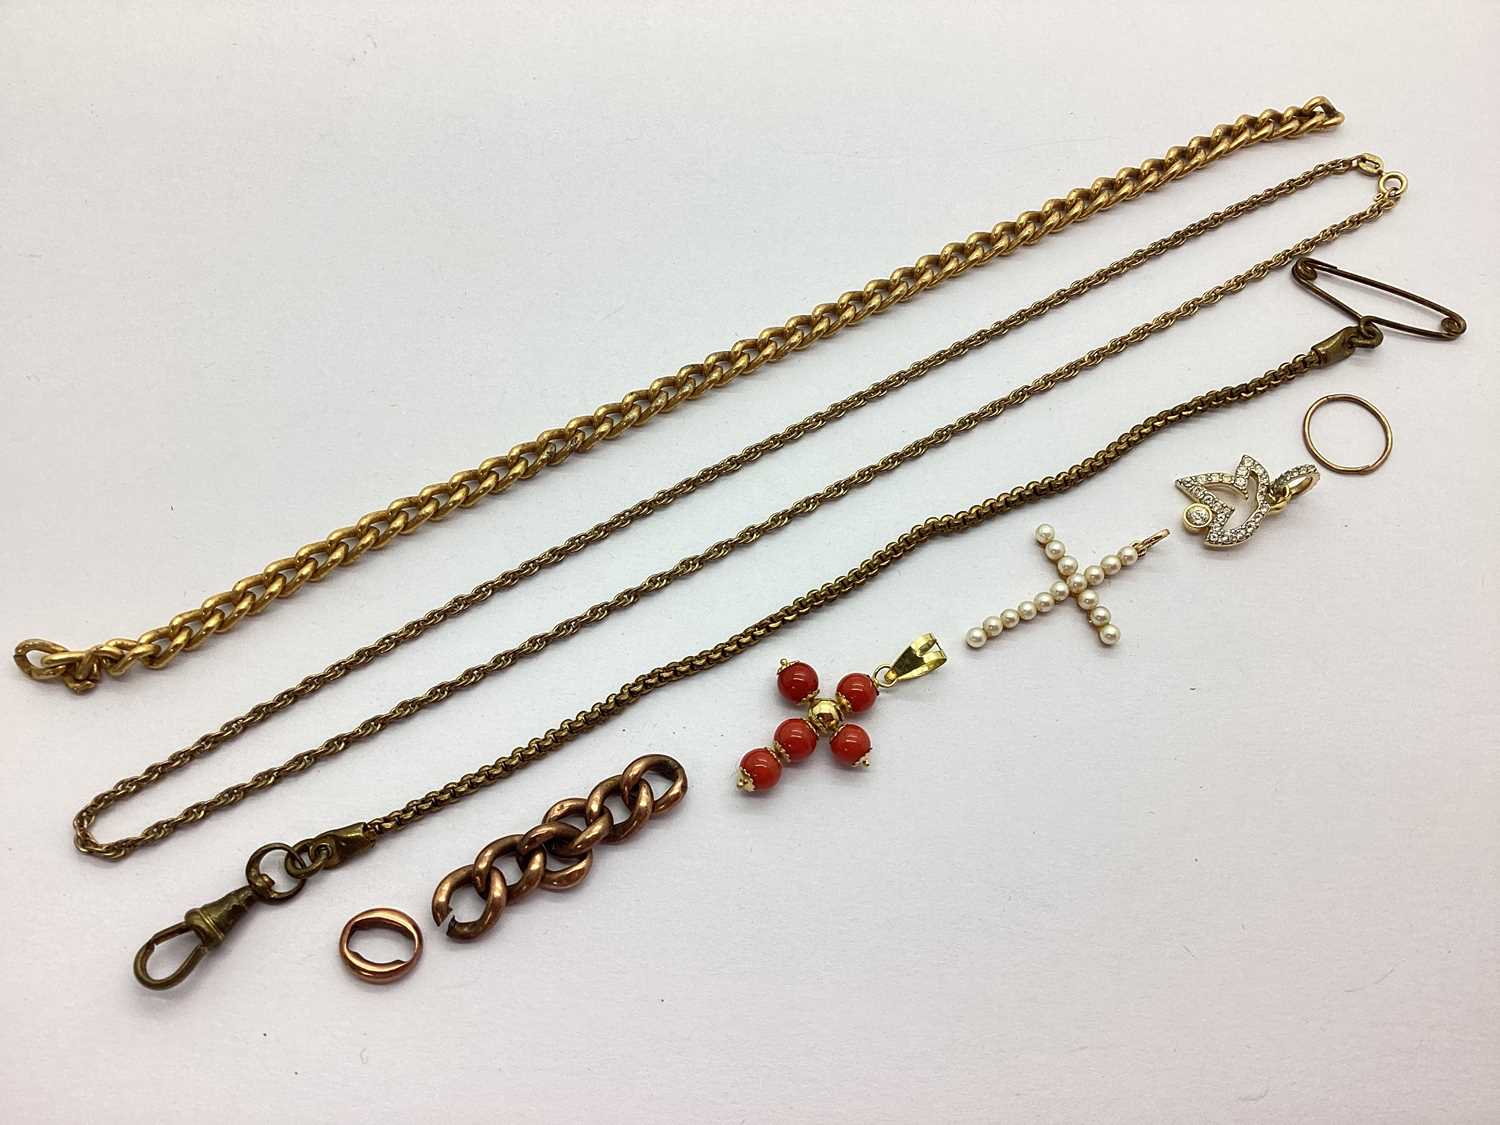 A 9ct Gold Chain, cross pendants, part chains, Swarovski pendant etc.